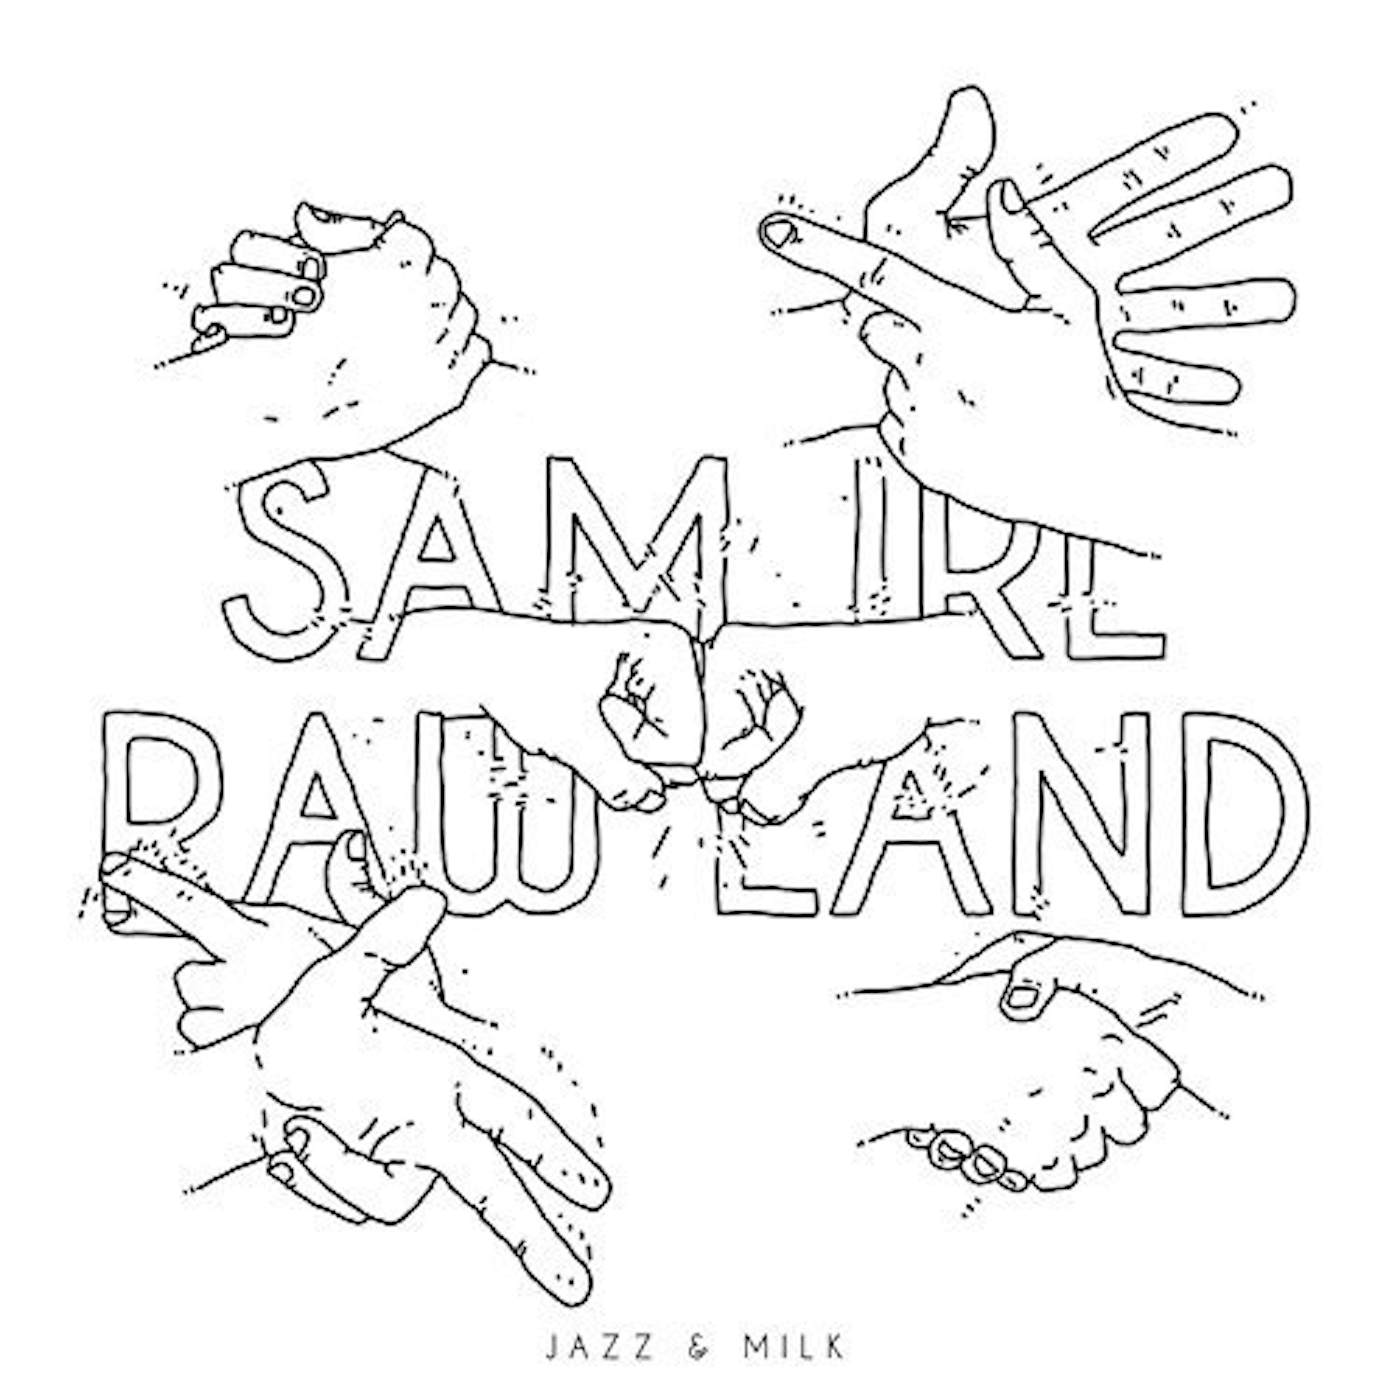 Sam Irl Raw Land Vinyl Record